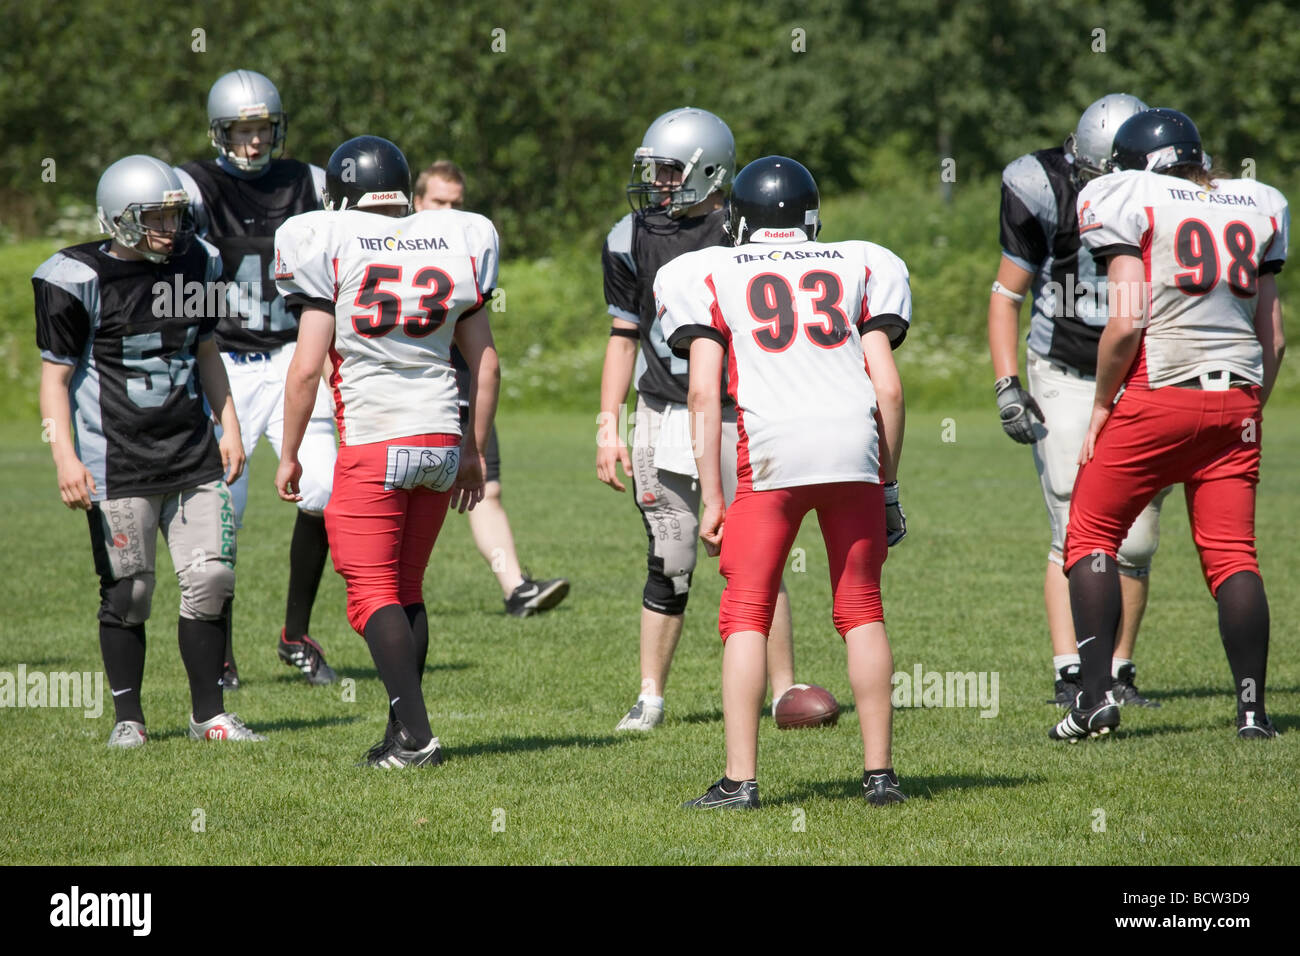 Action de jeu de football américain Junior Lappeenranta FINLANDE Banque D'Images